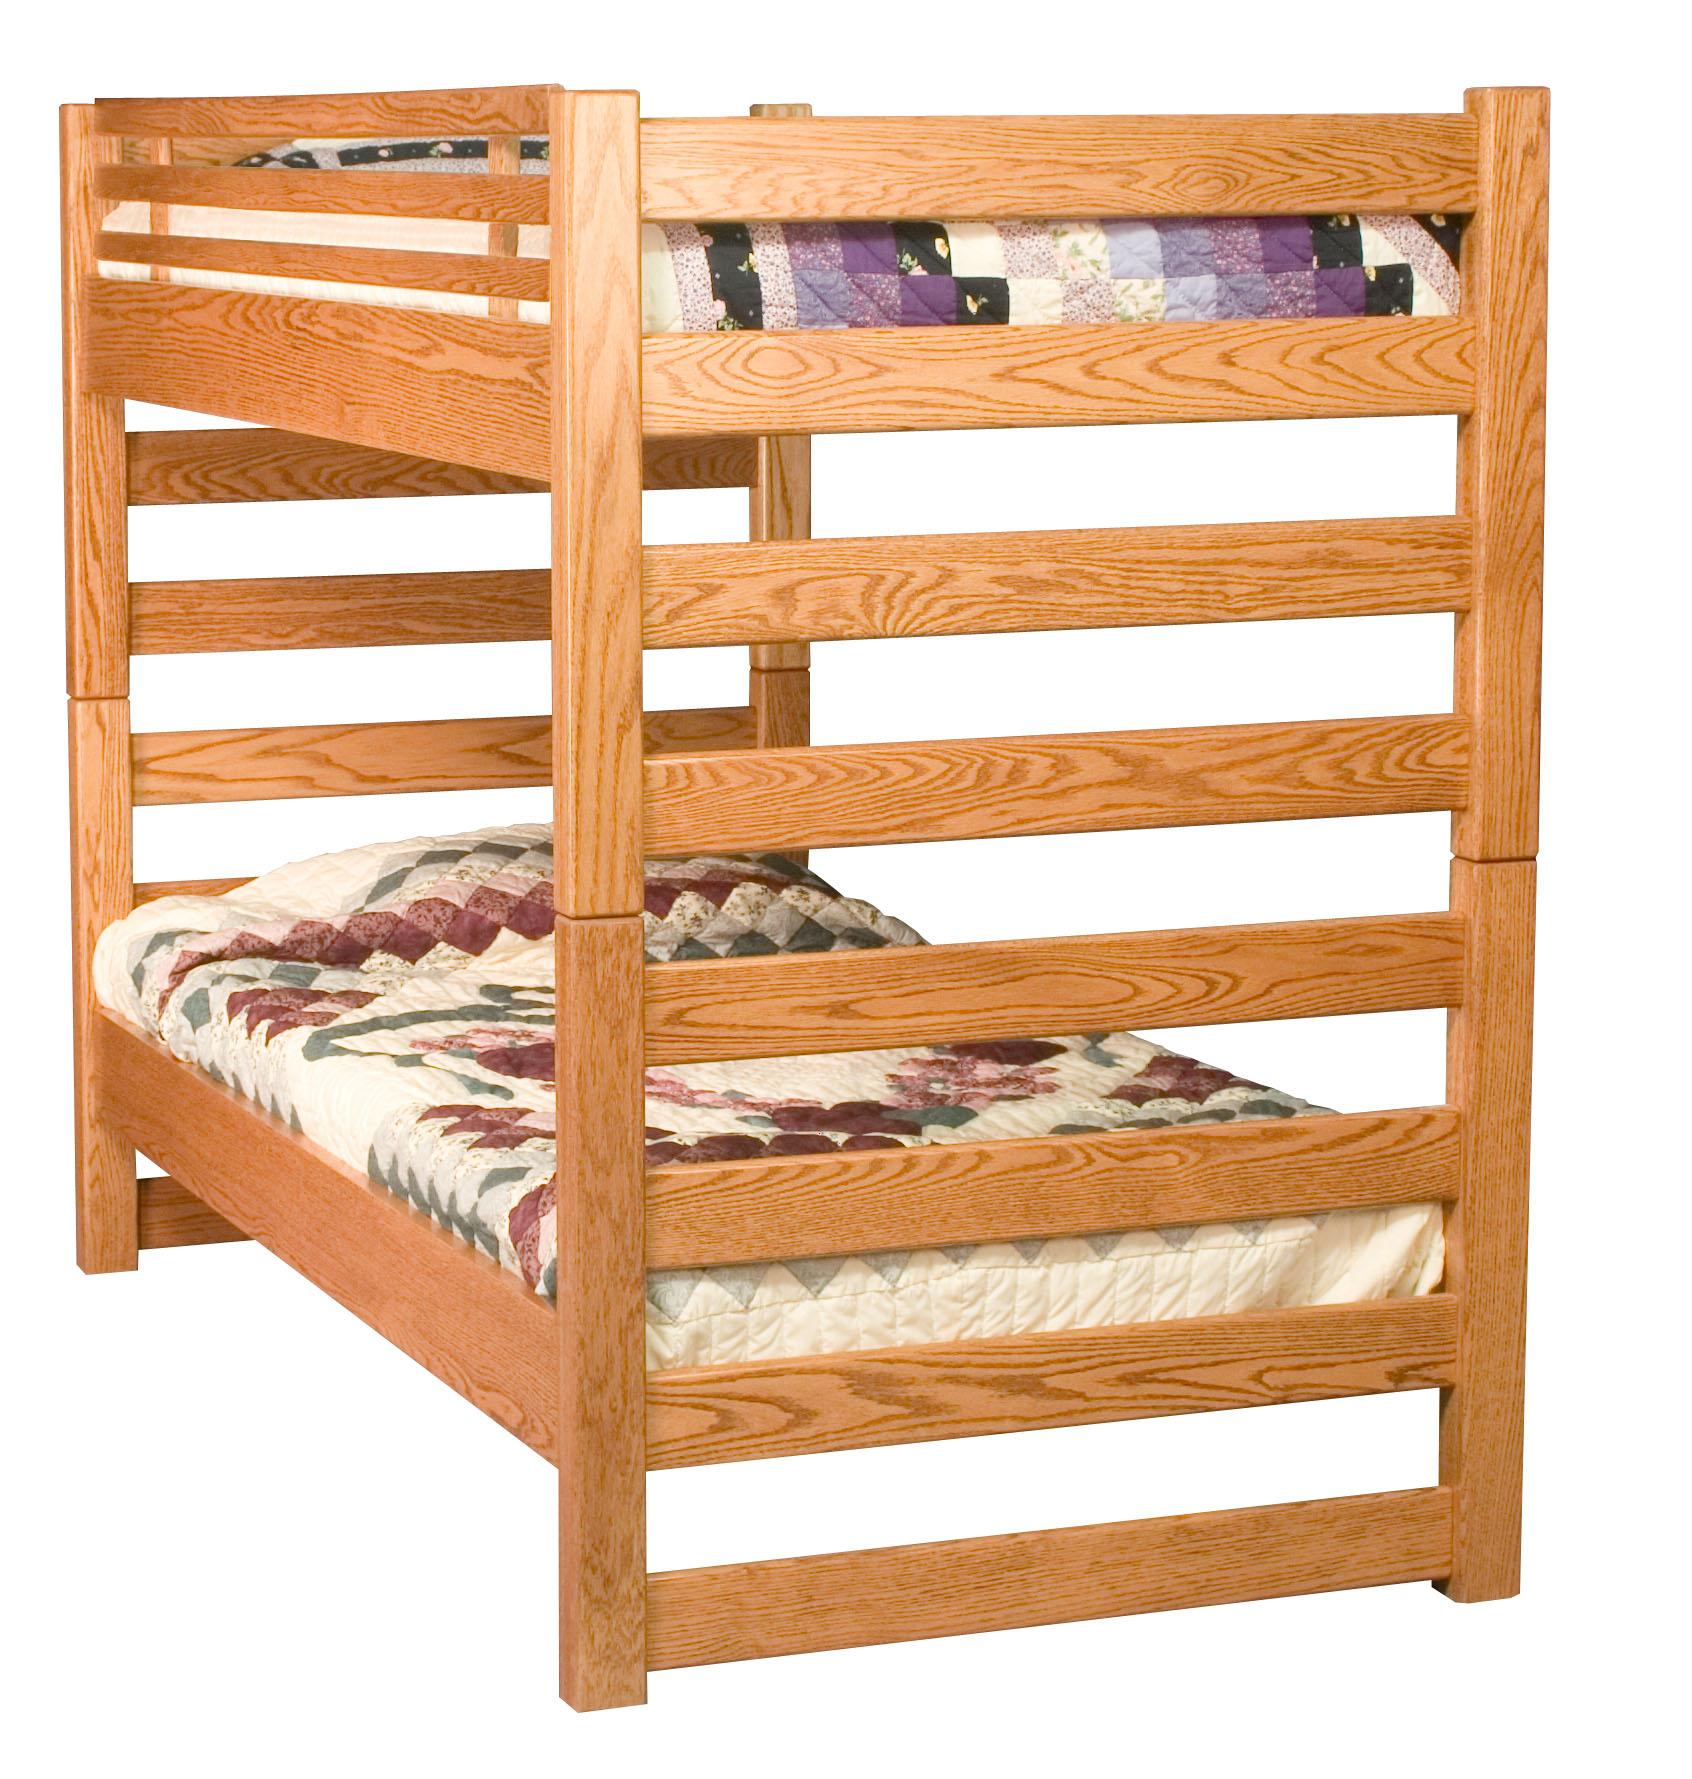 Ladder Bunk Bed - Amish Furniture Store - Mankato, MN